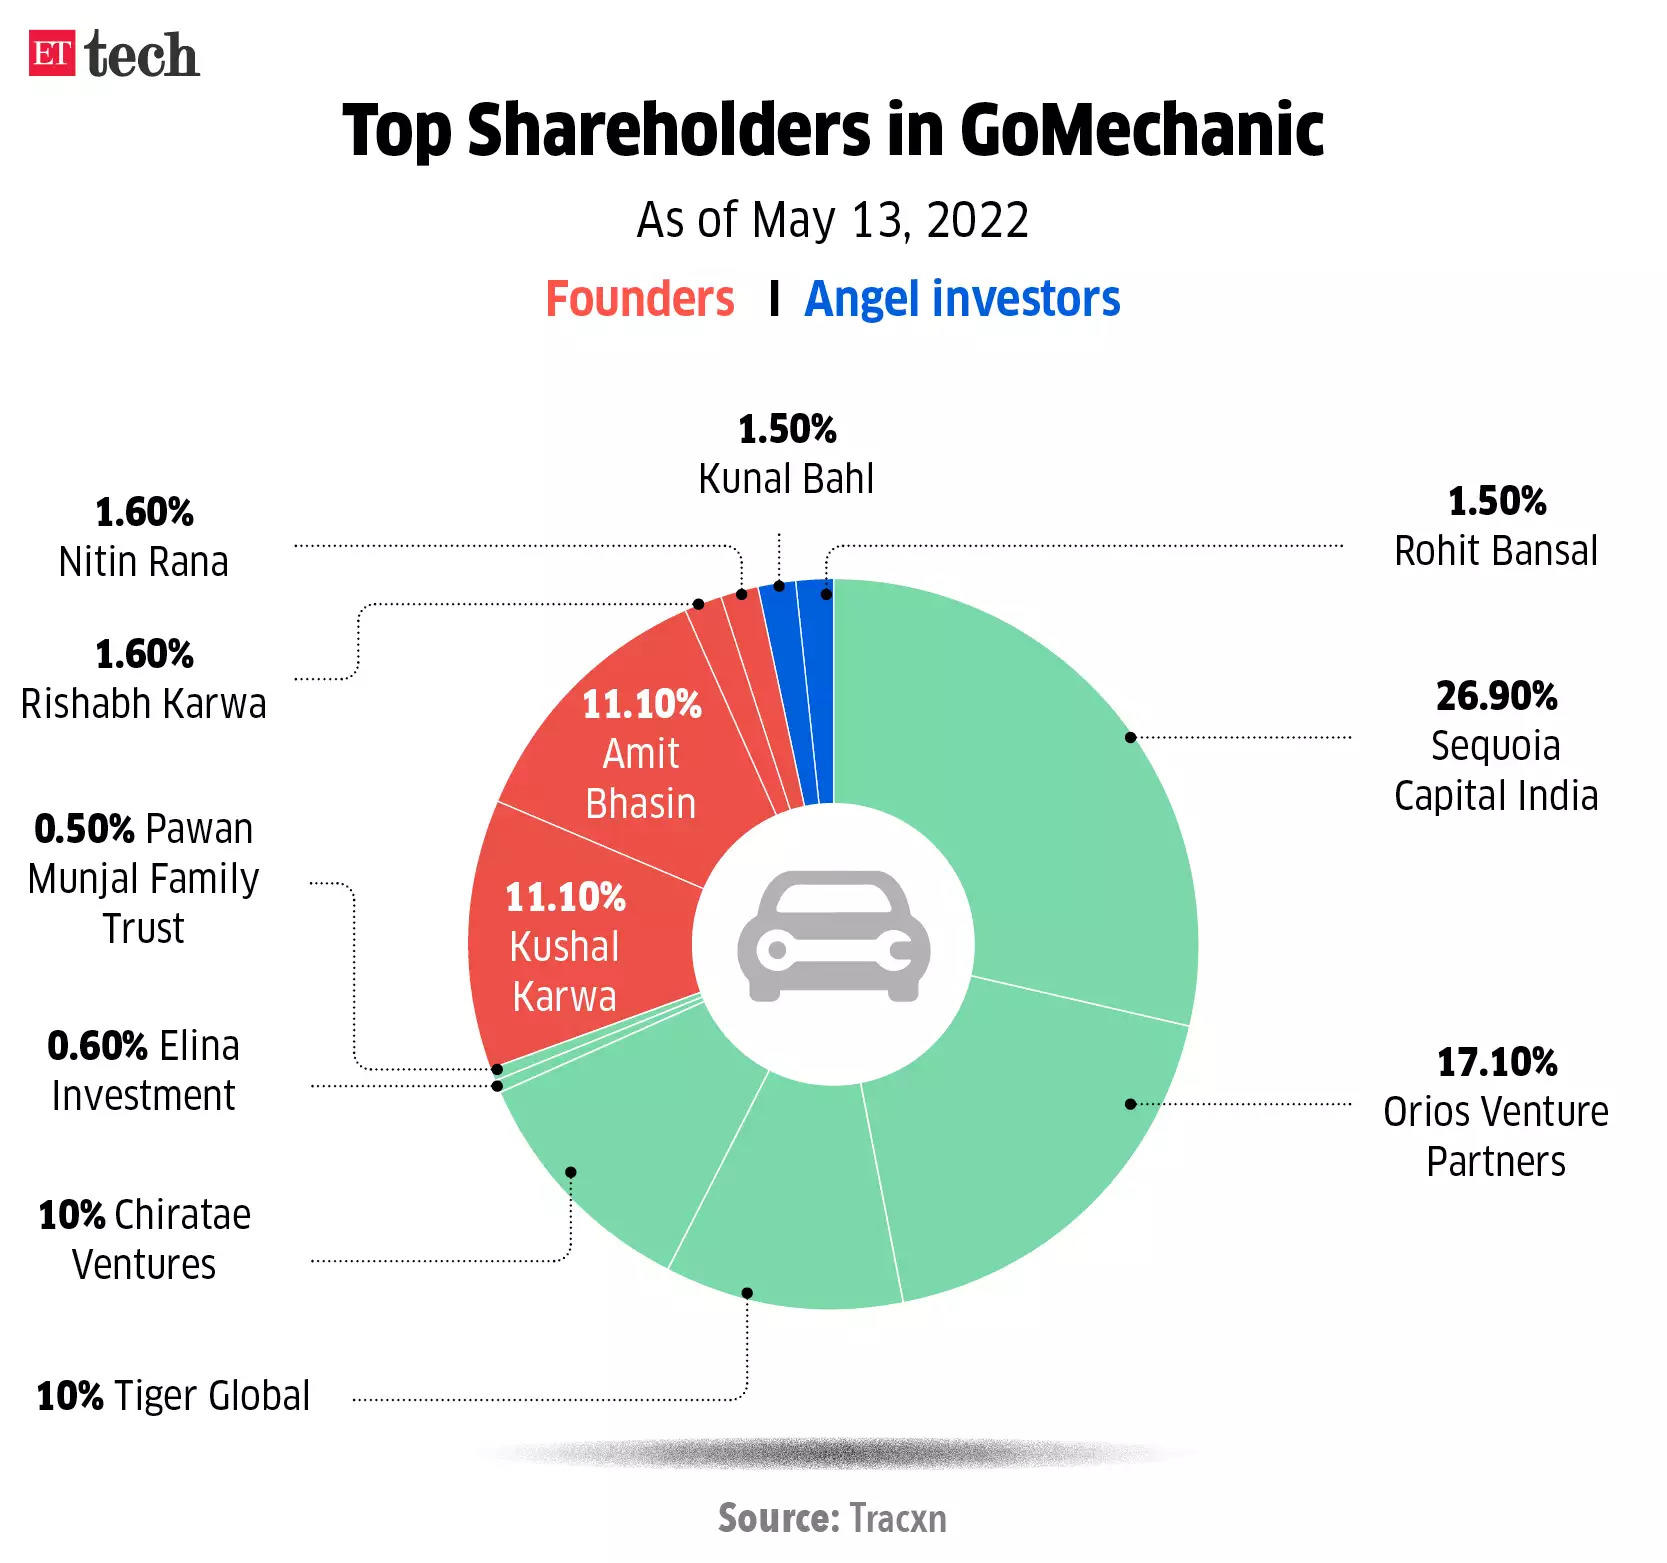 Top Shareholders